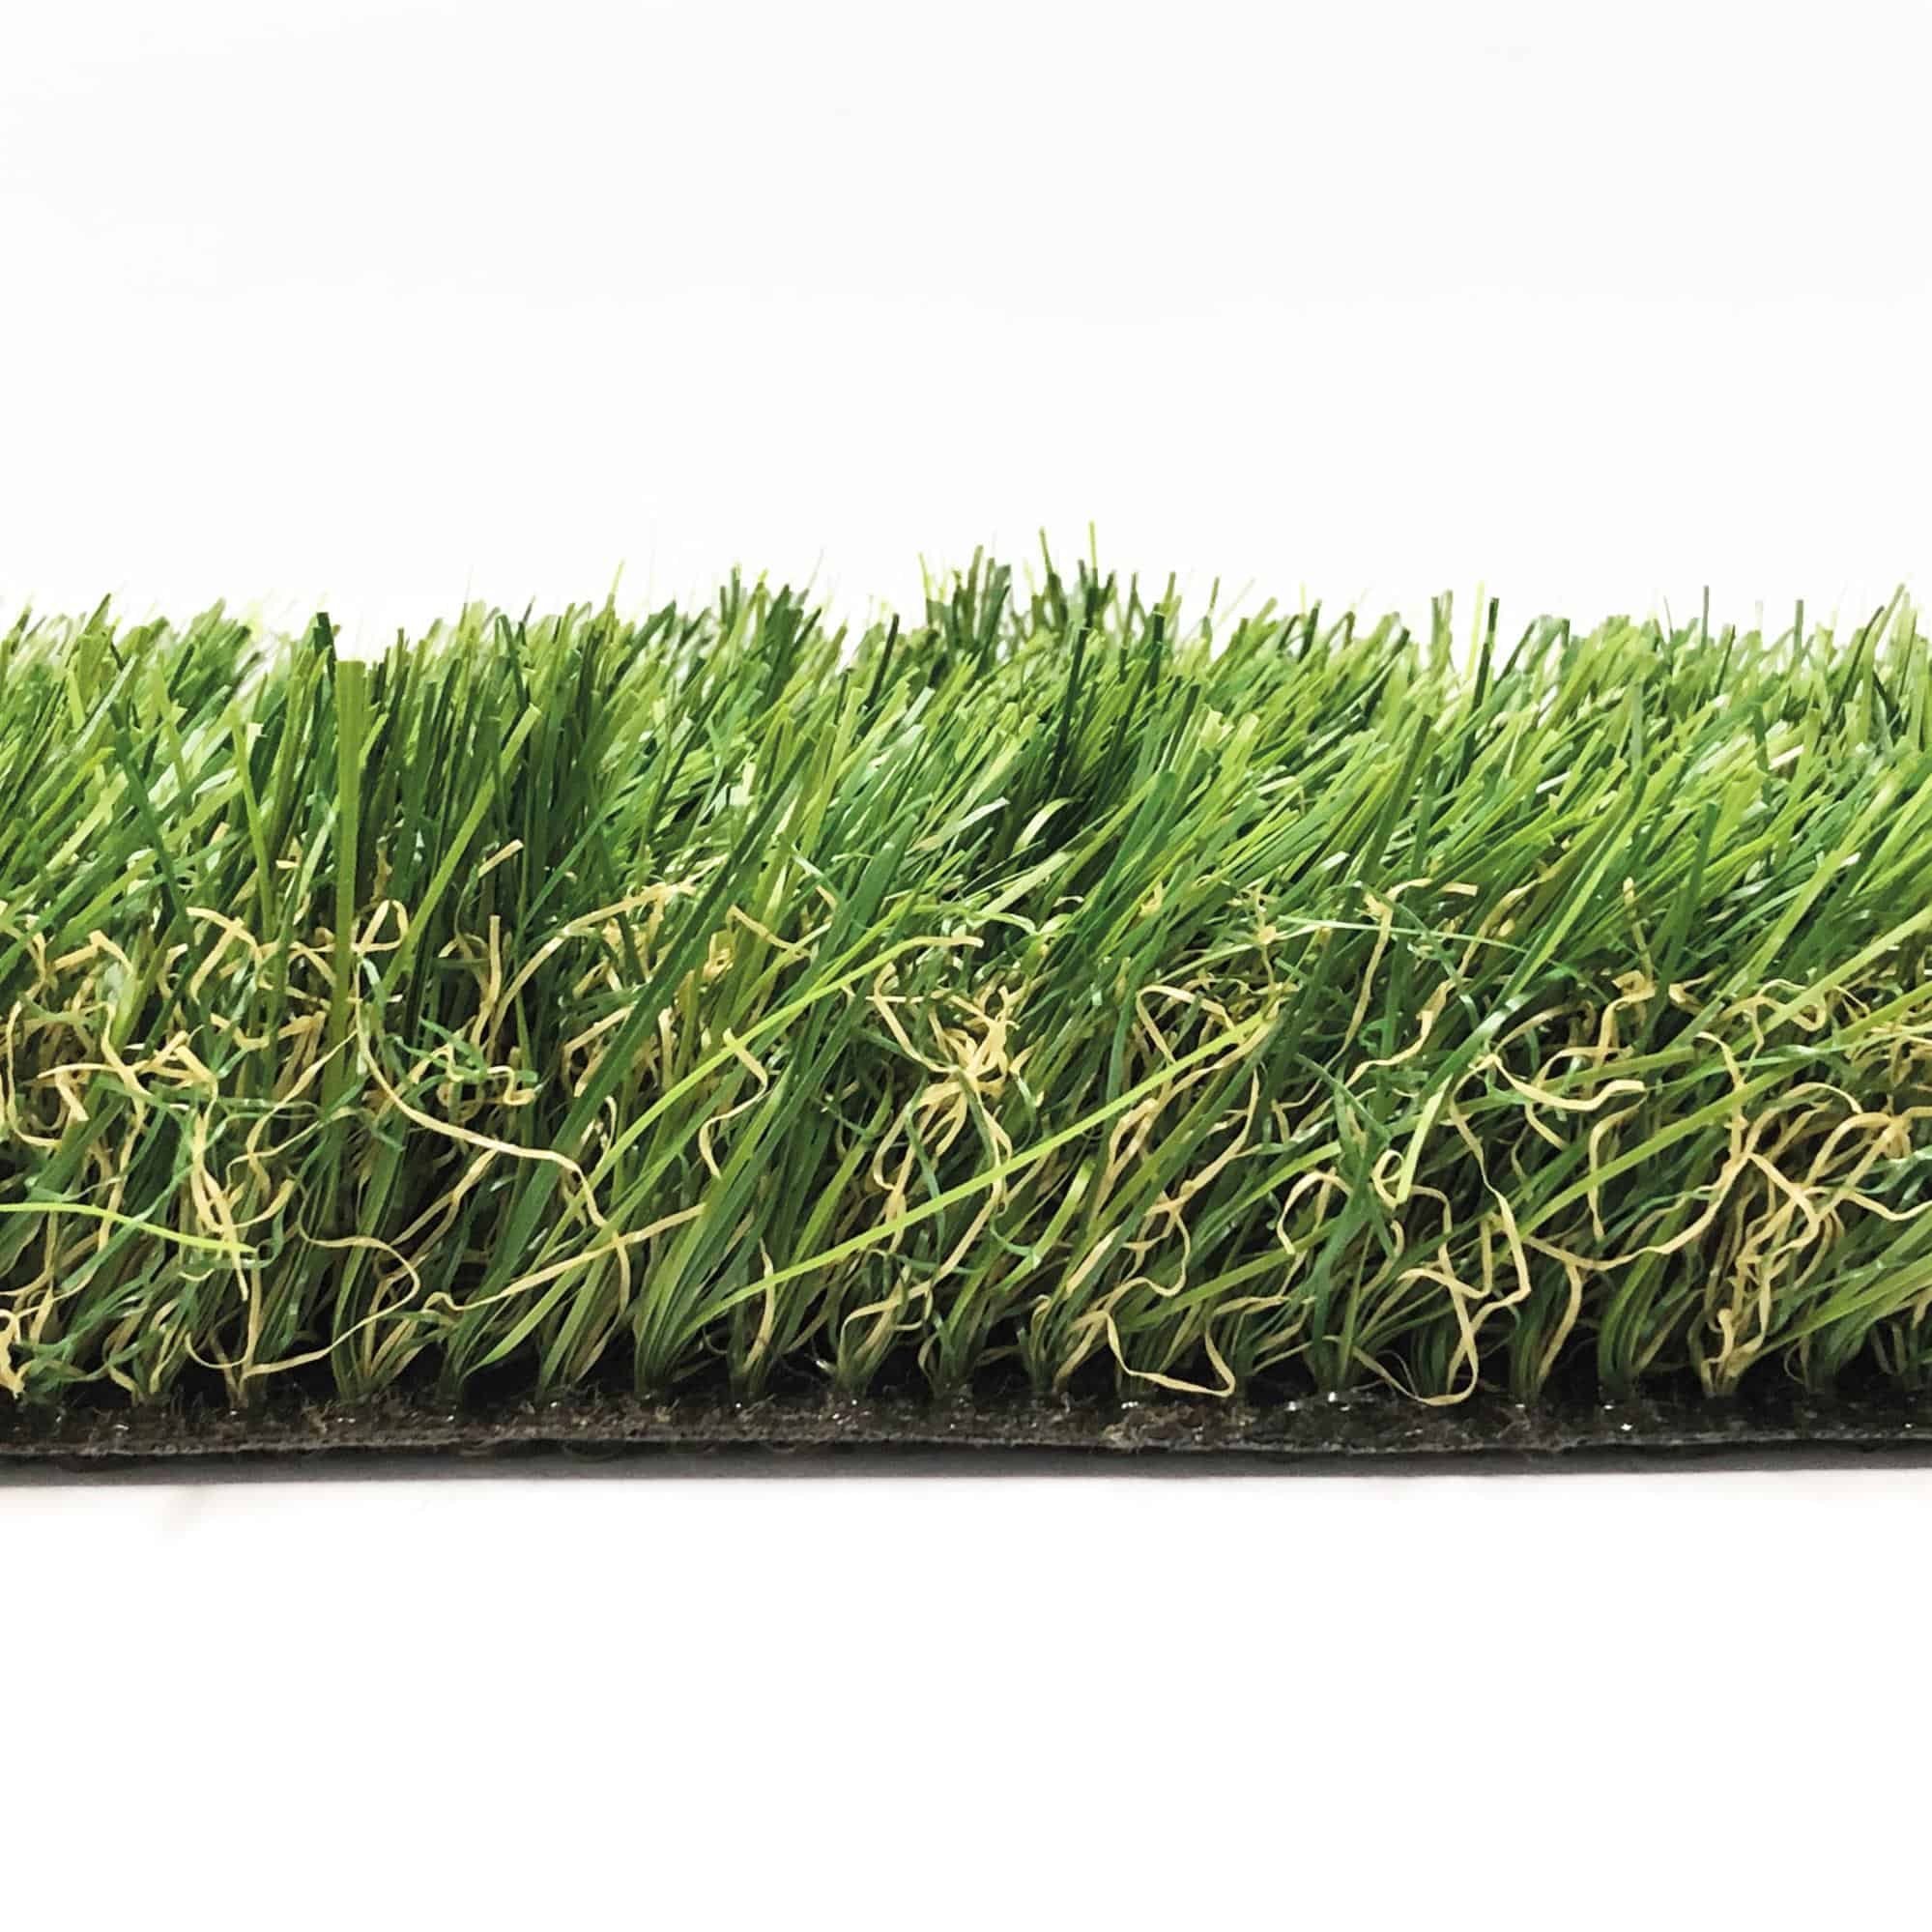 CORE Lawn Natural Artificial Grass 4m Wide Roll 5 m